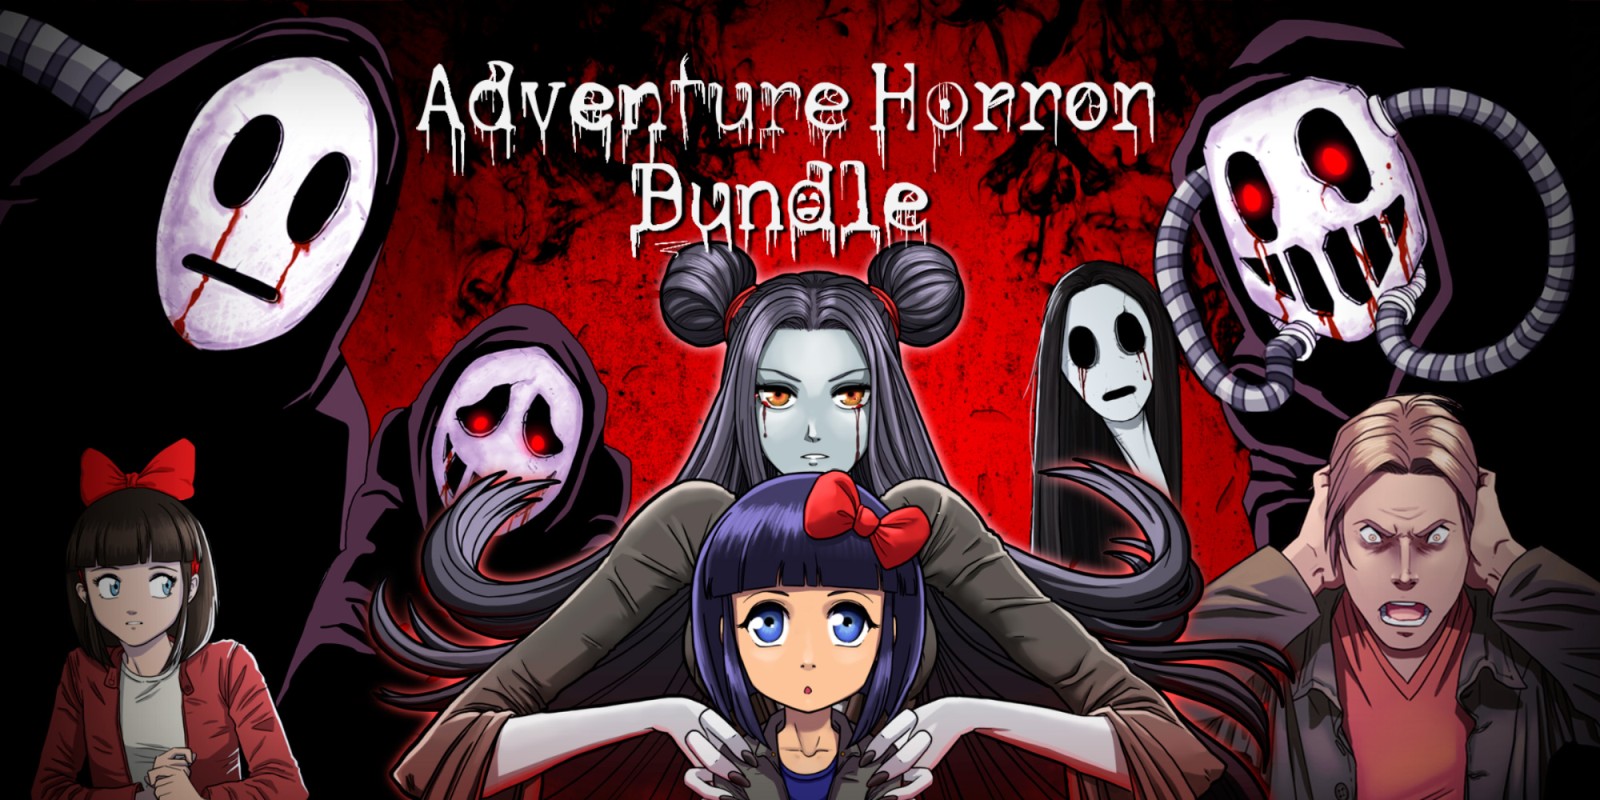 Adventure Horror Bundle